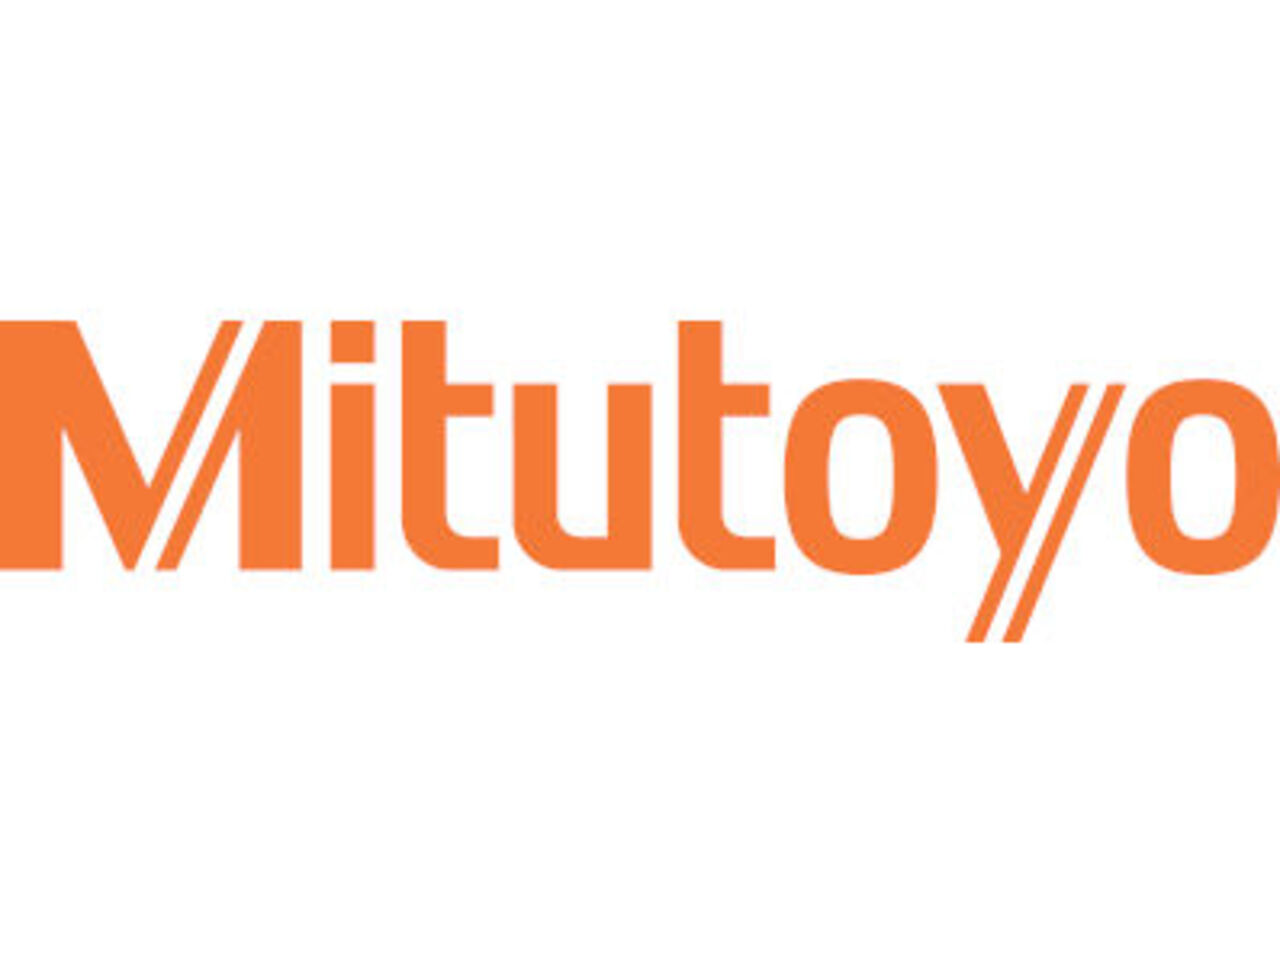 Mitutoyo joins the WorldSkills Movement